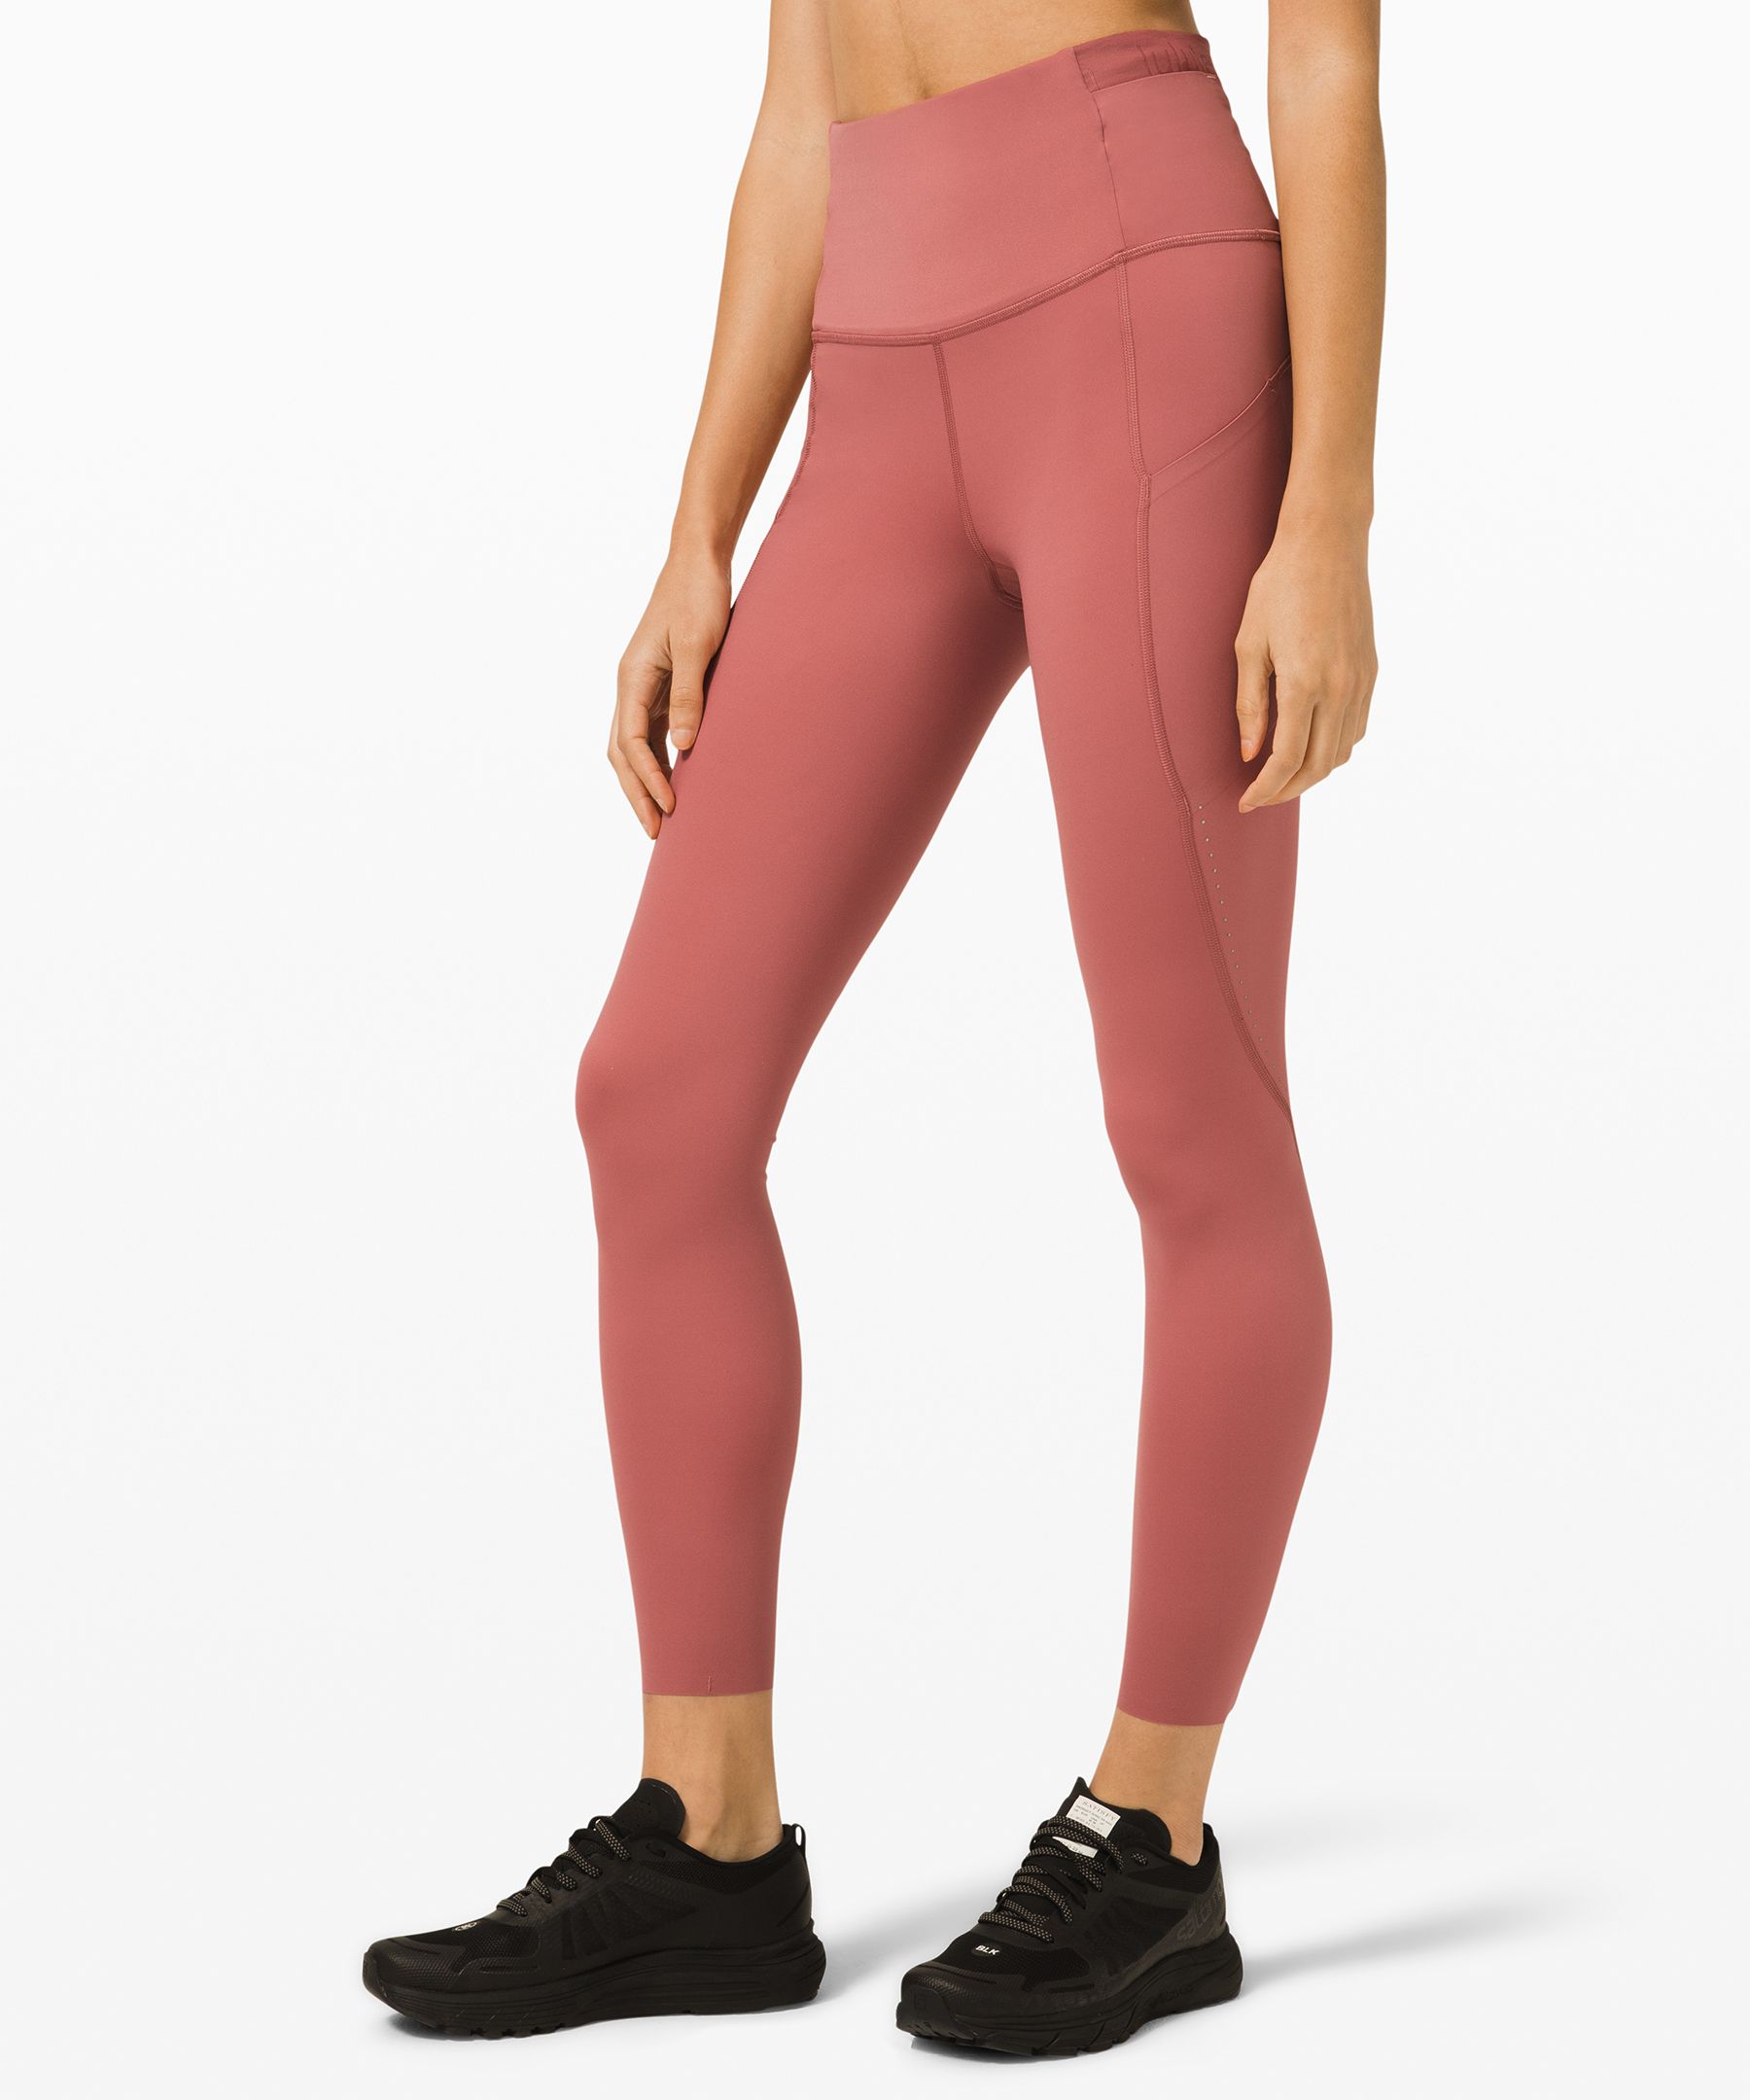 Women's elite compression tights, pink 